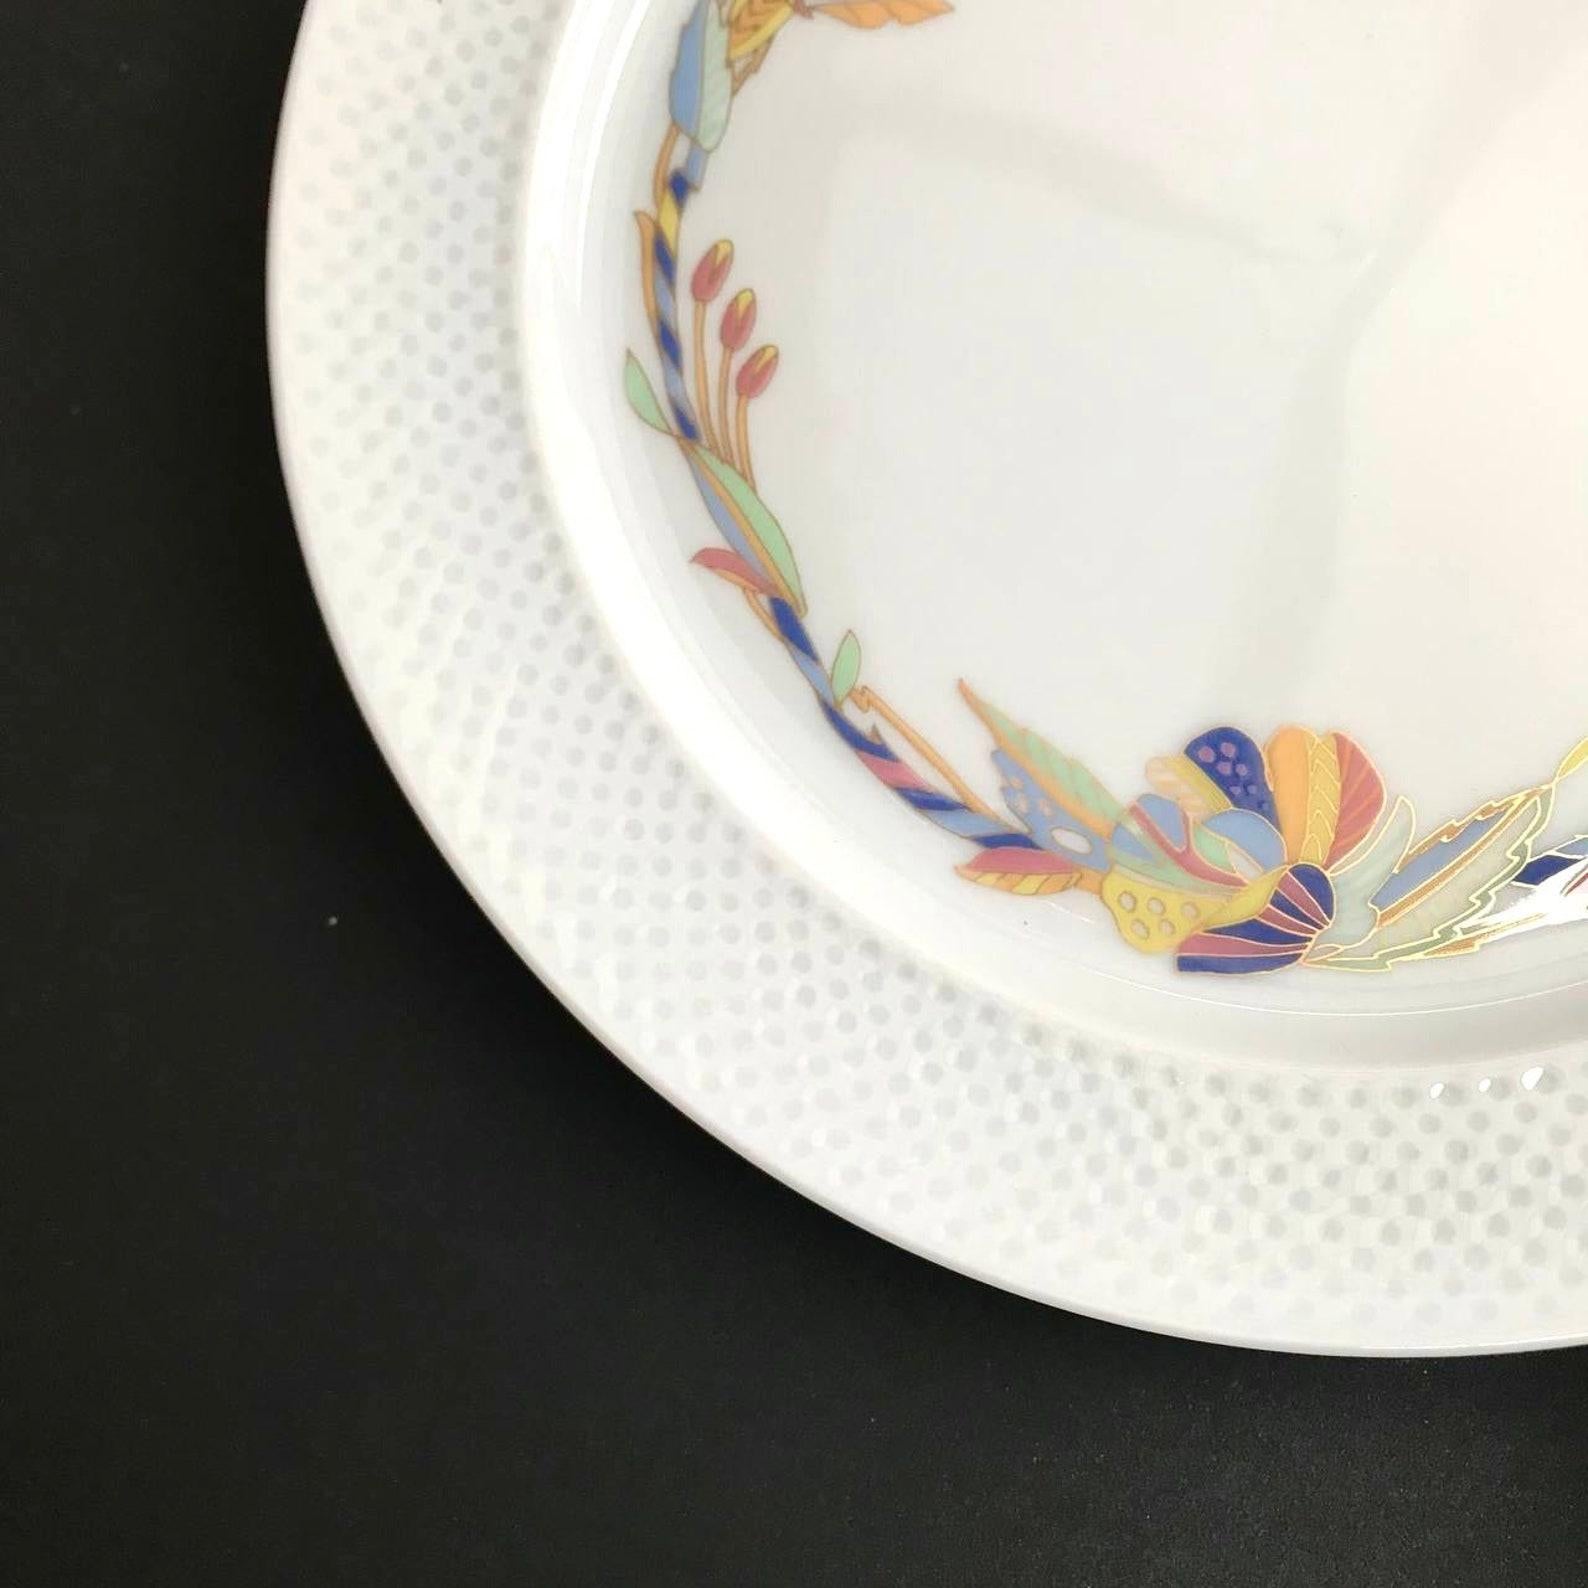 Mid-Century Modern Rosenthal Dessert Plates Vintage Plates with Floral Pattern German Porcelain For Sale